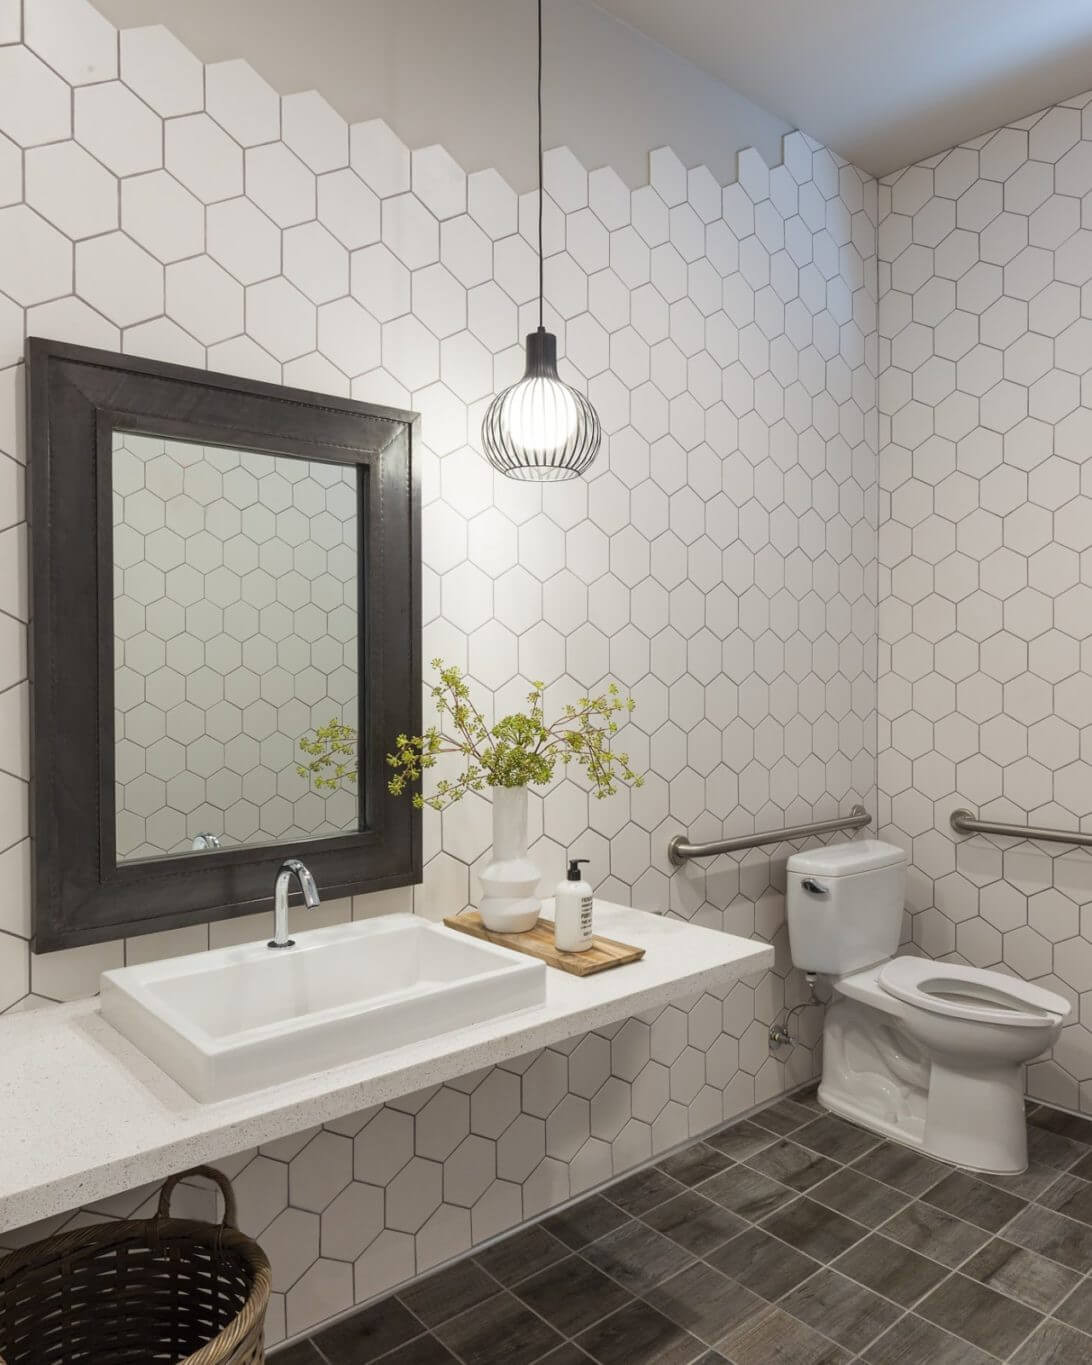 Hexagon Tiles Bathroom
 Your plete Guide to Bathroom Tile